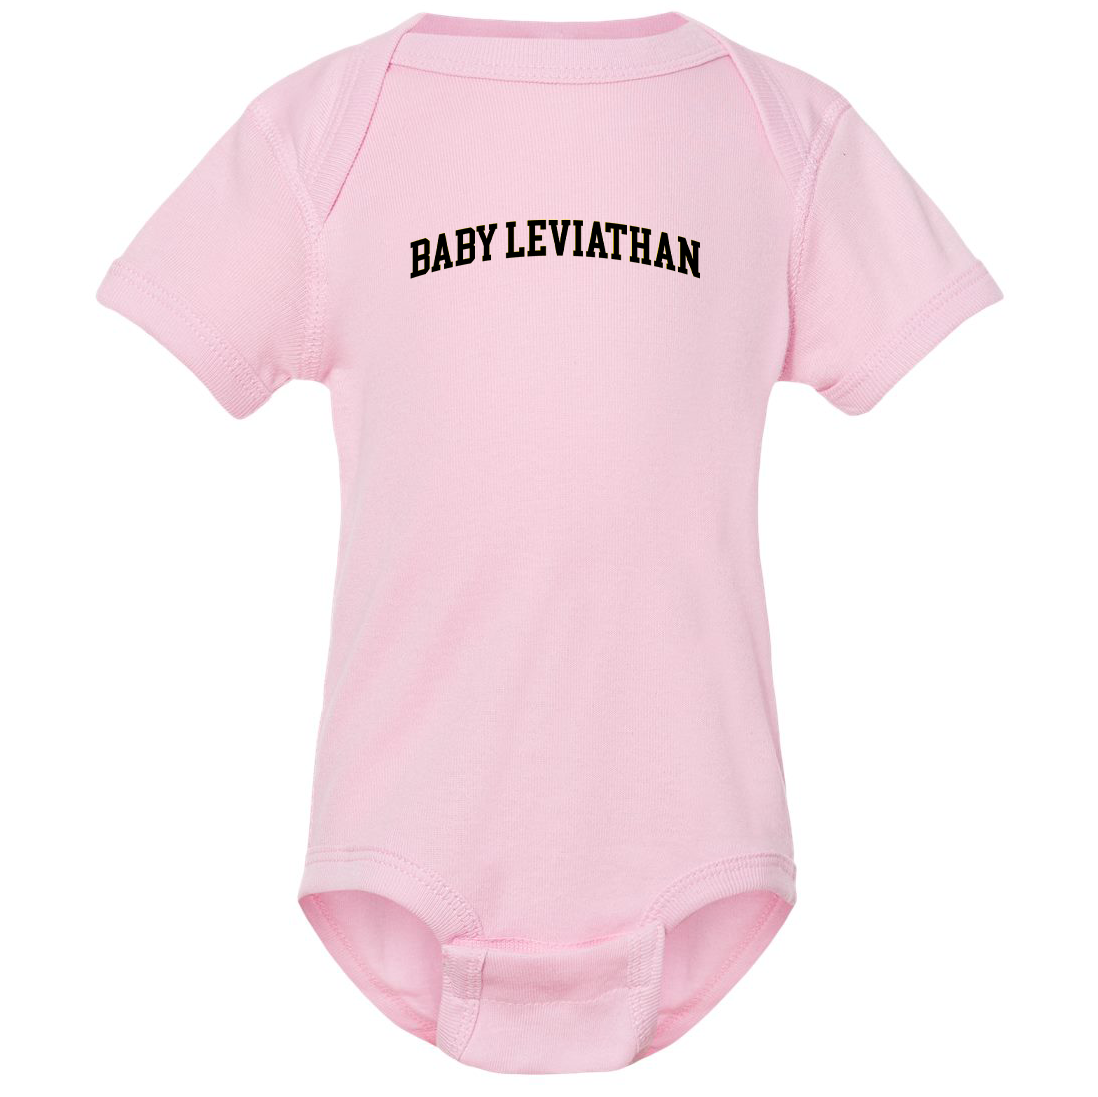 11th Cyber Battalion Infant Baby Rib Bodysuit